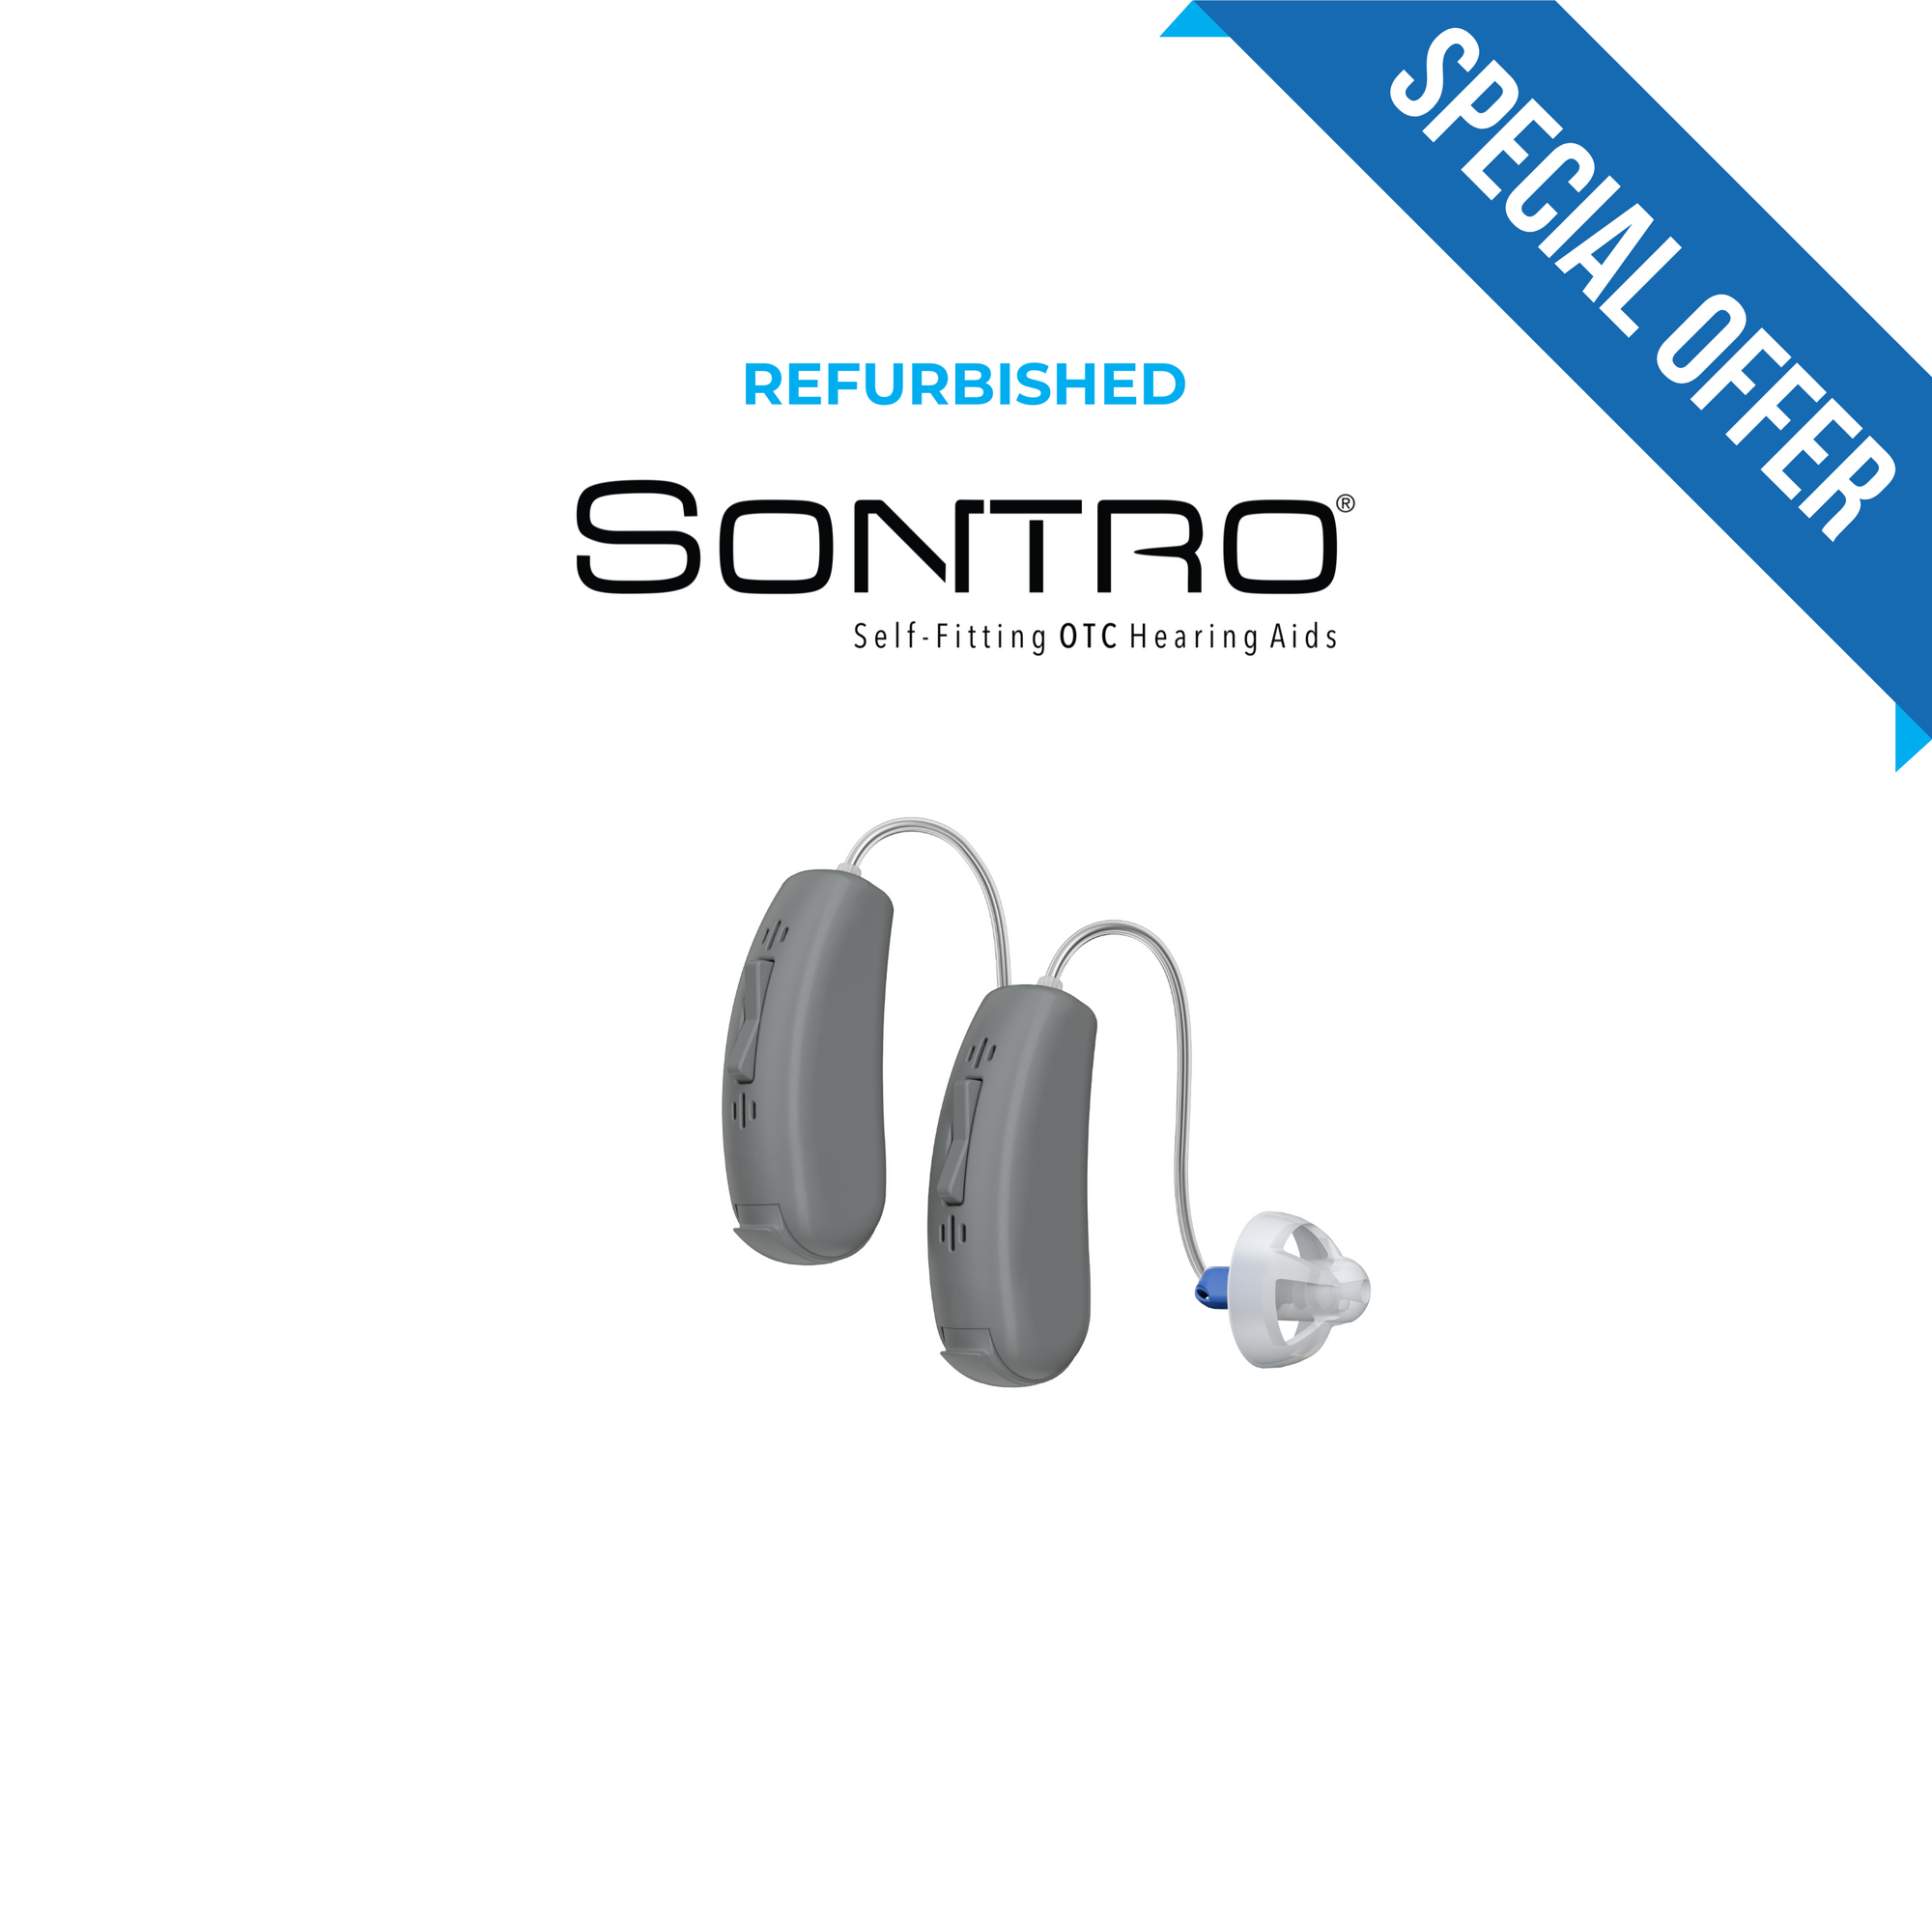 Refurbished Sontro® Self-Fitting OTC Hearing Aids, Grey Set